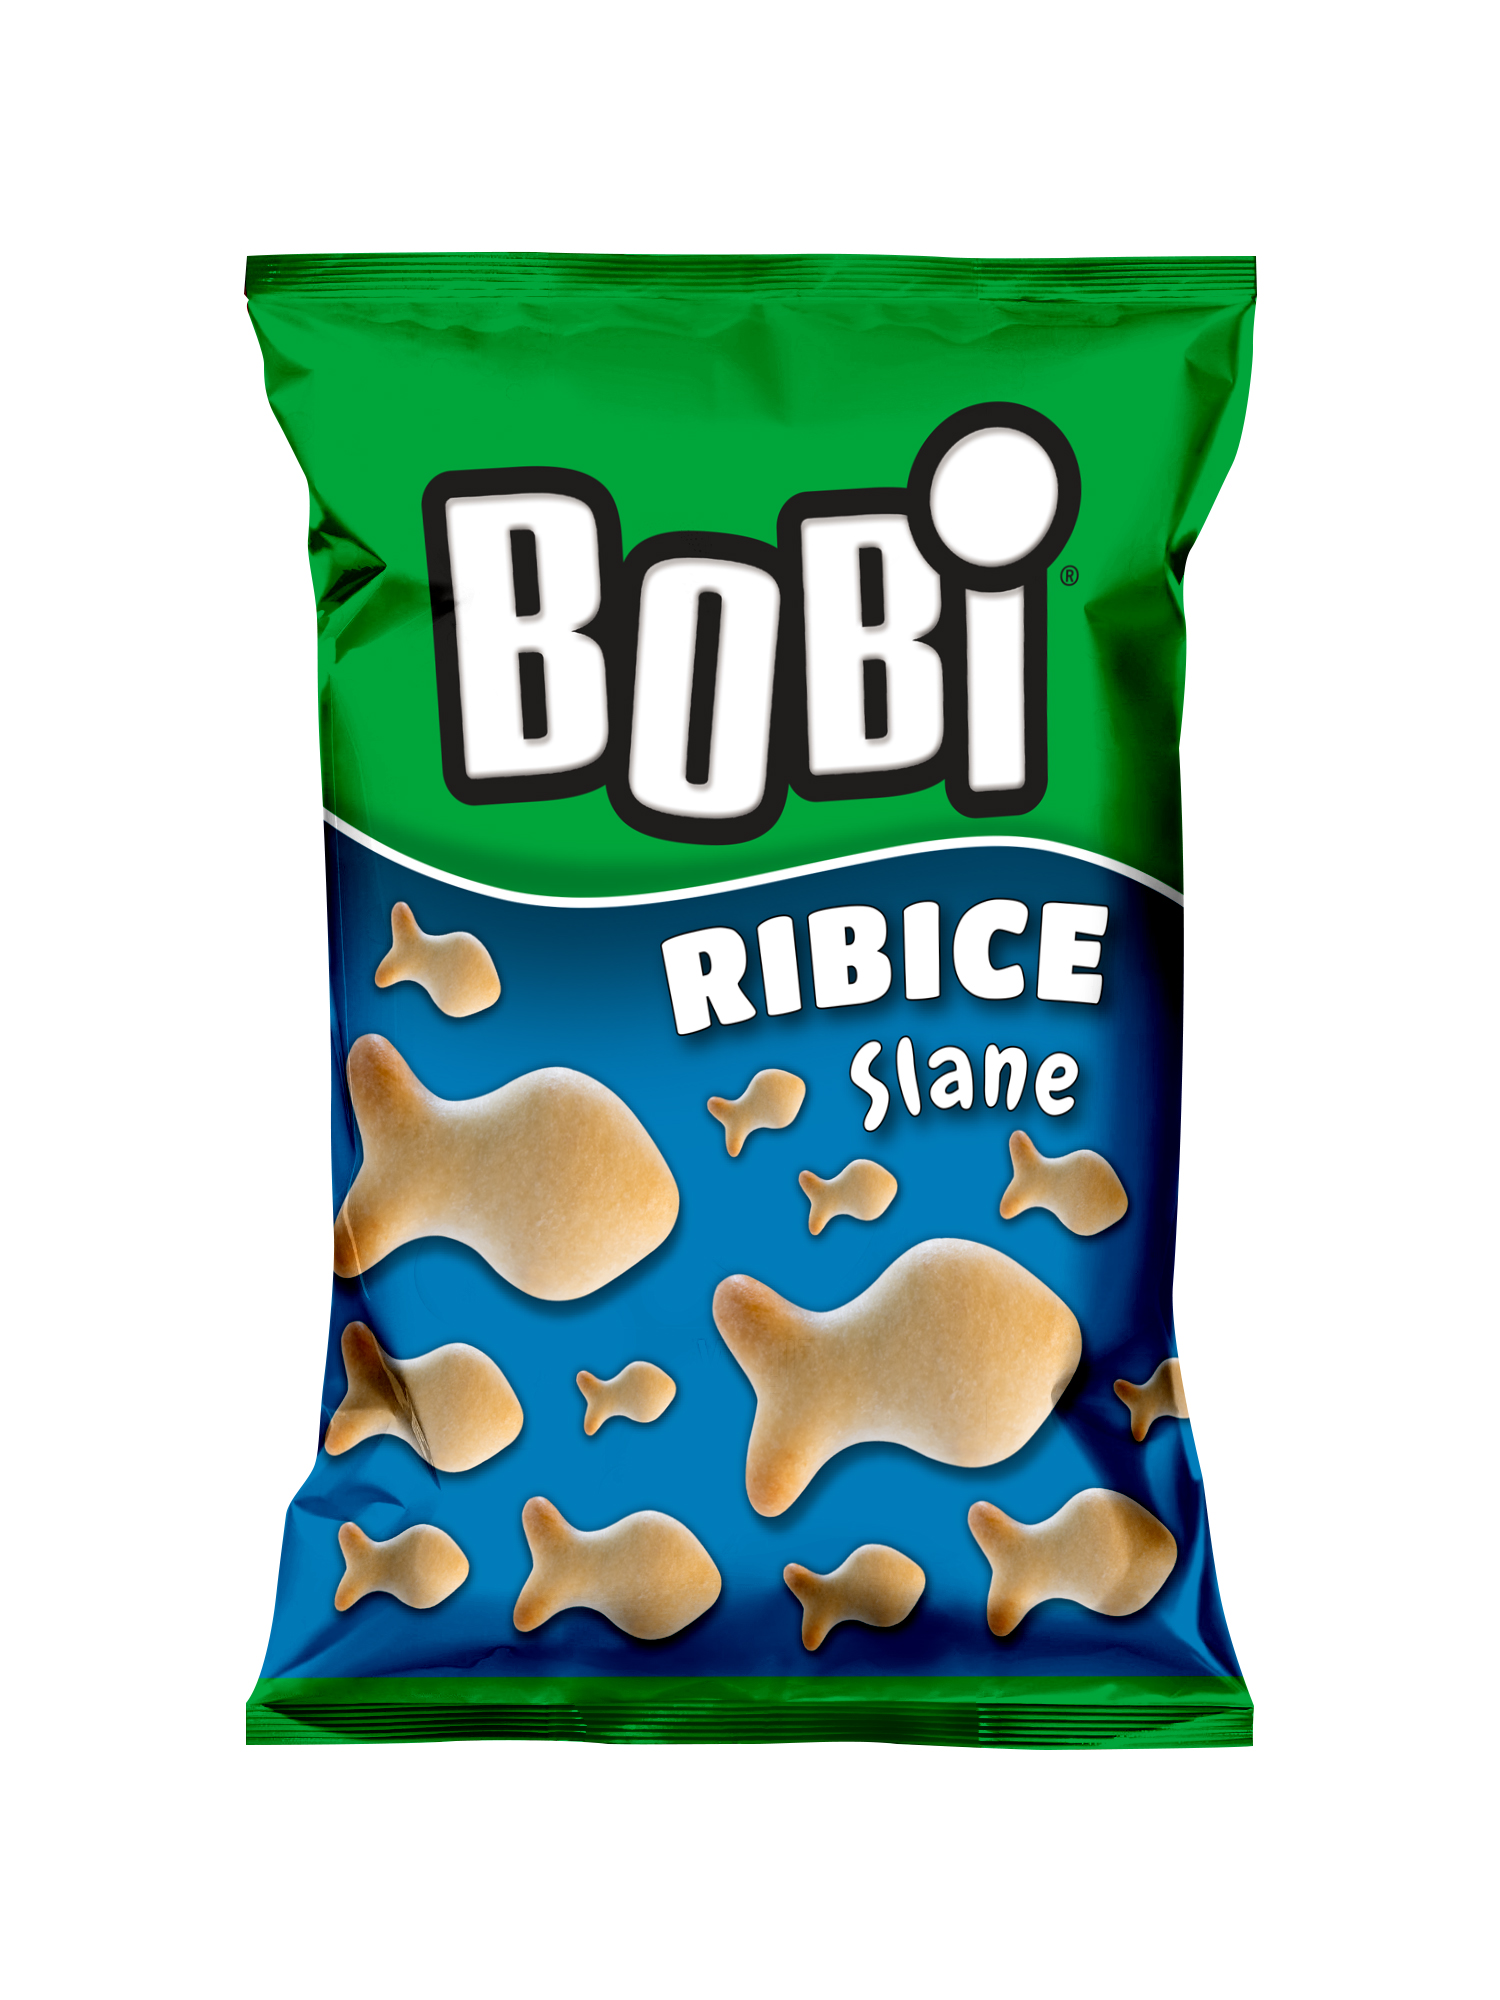 BOBI RIBICE SLANE 150g